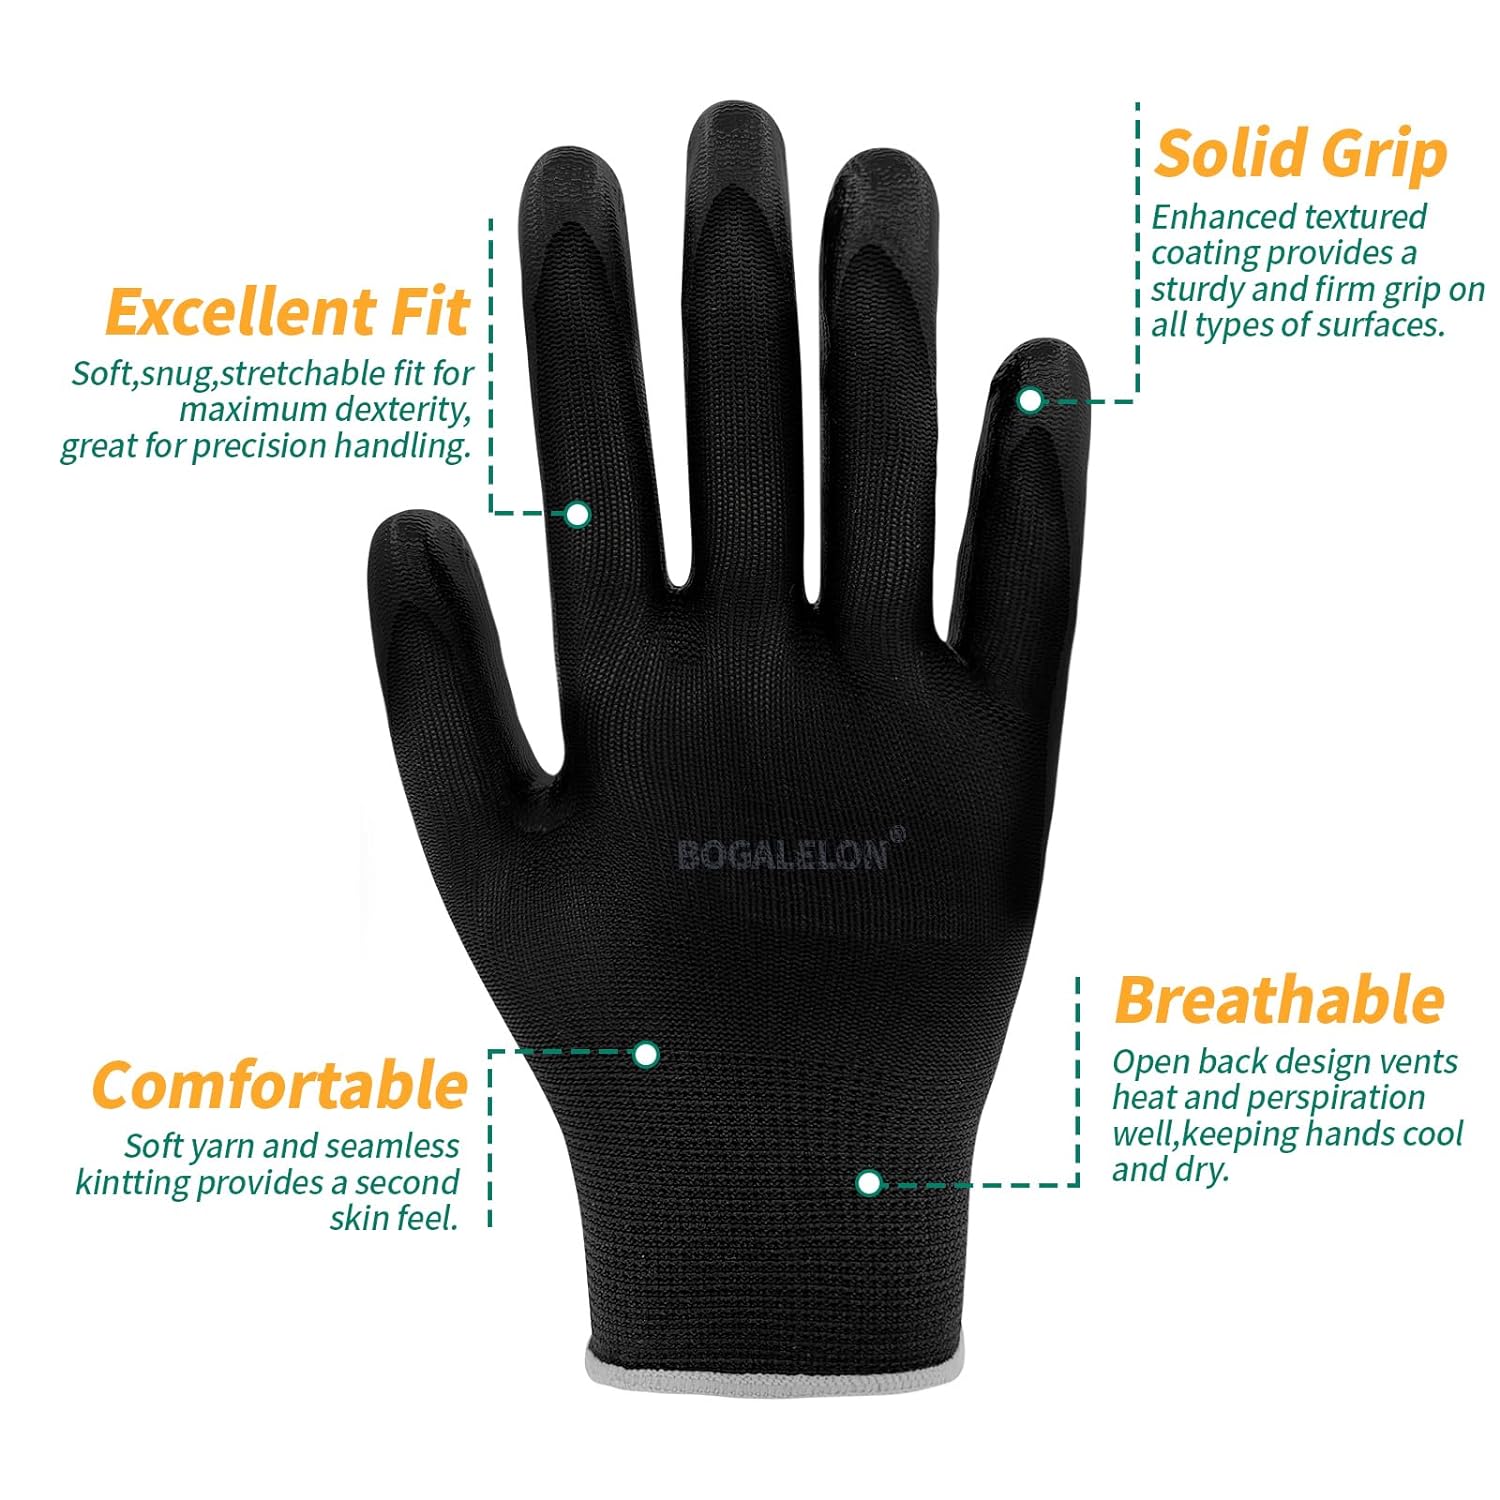 Bogalelon Safety Work Gloves Review